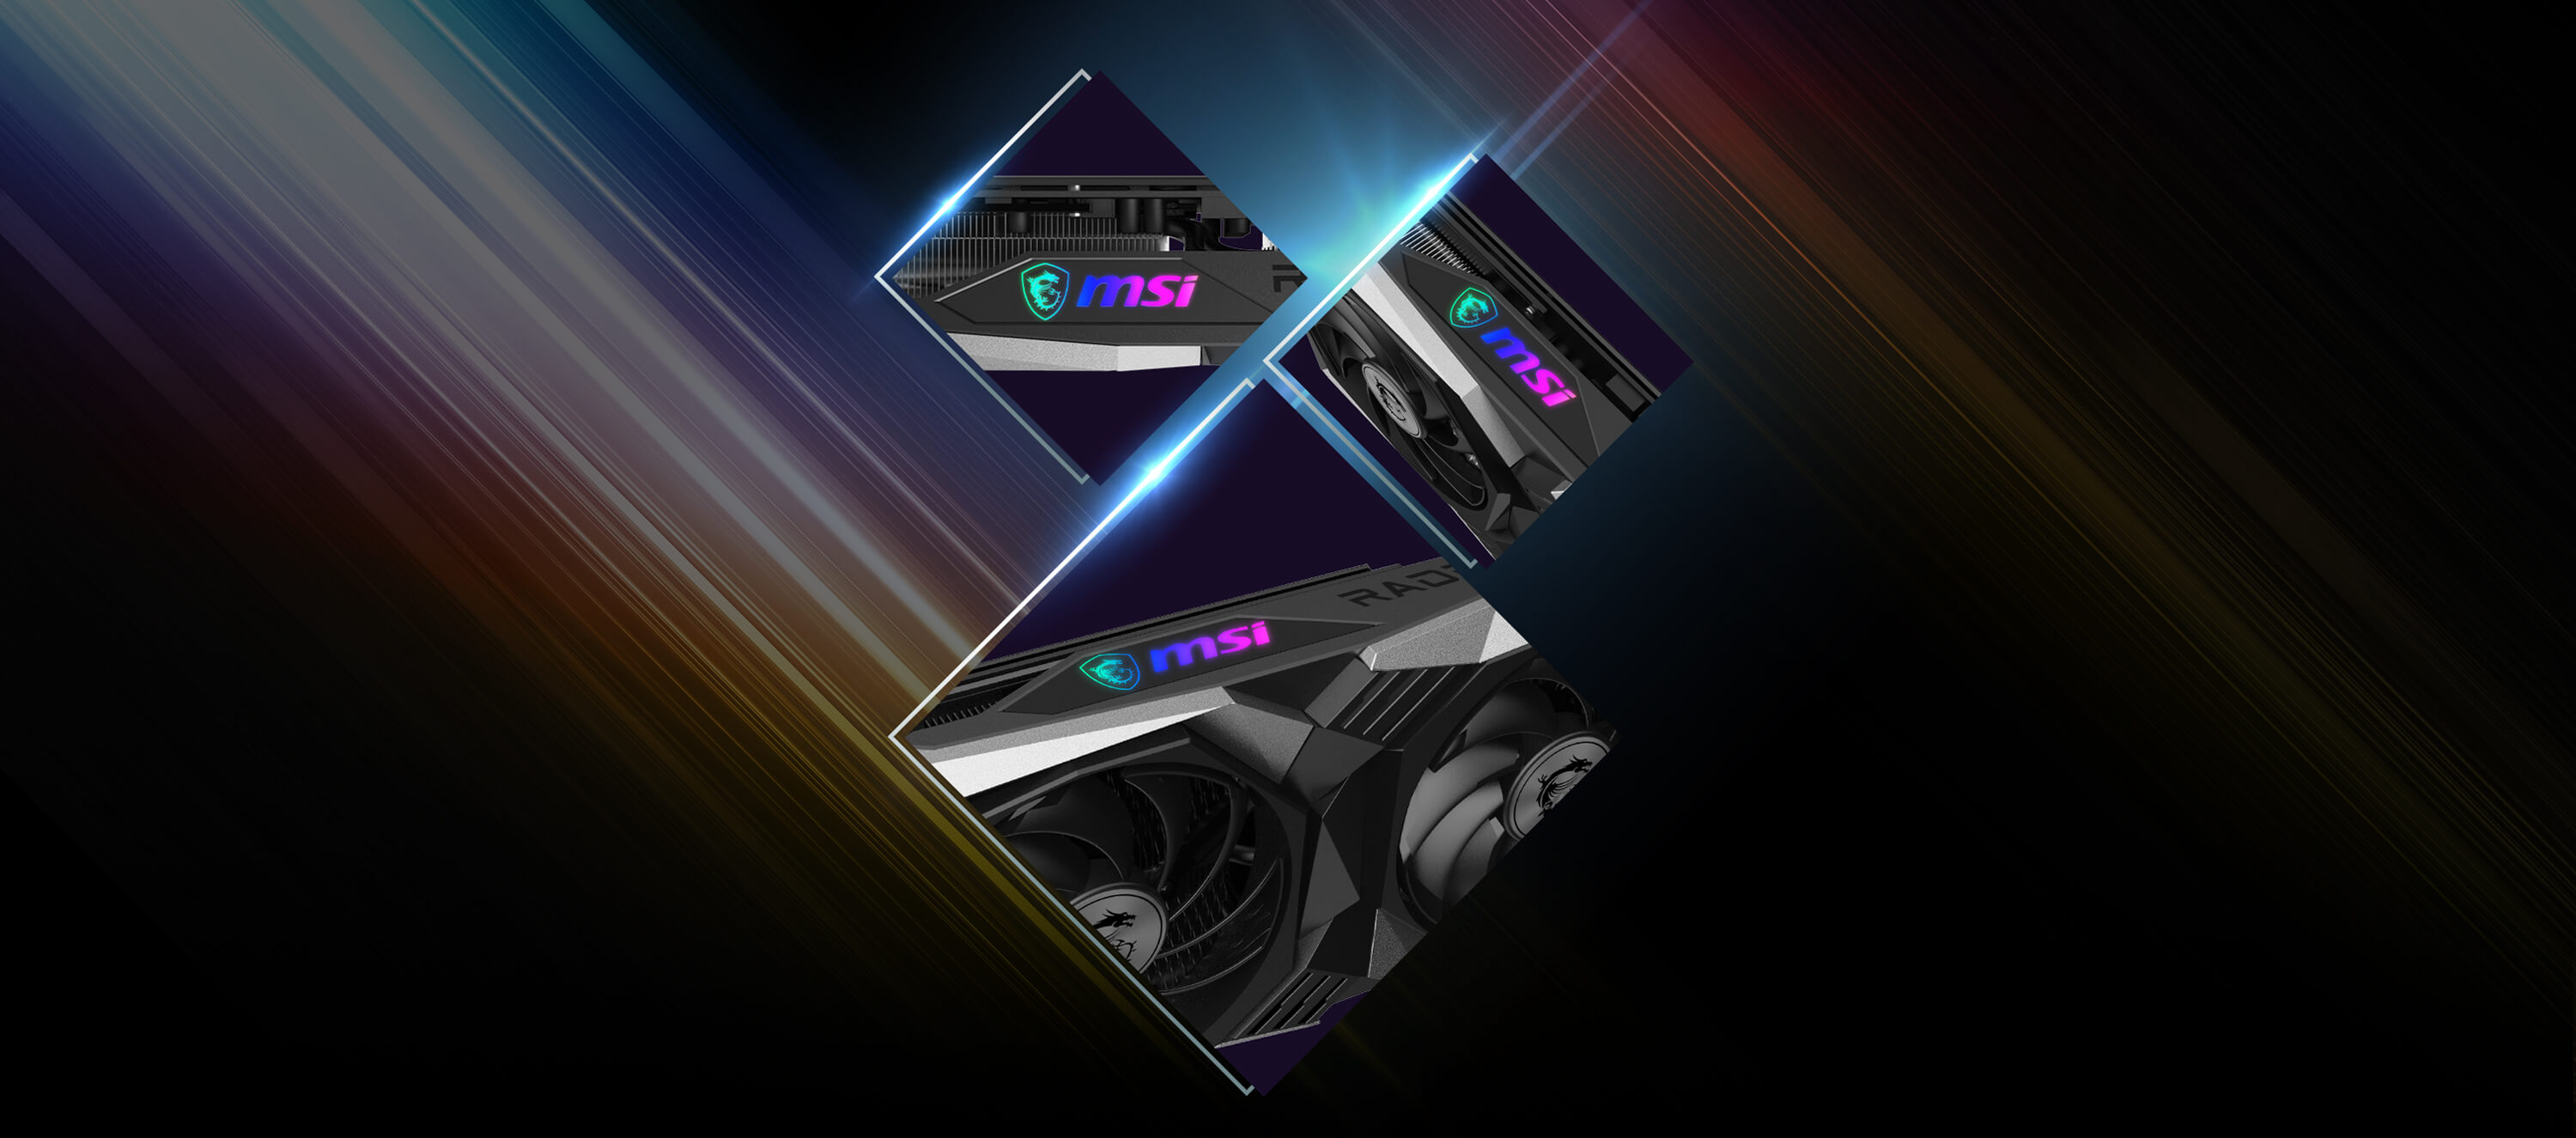  Buy MSI Radeon RX 6600 XT Gaming X 8G Graphic Card I